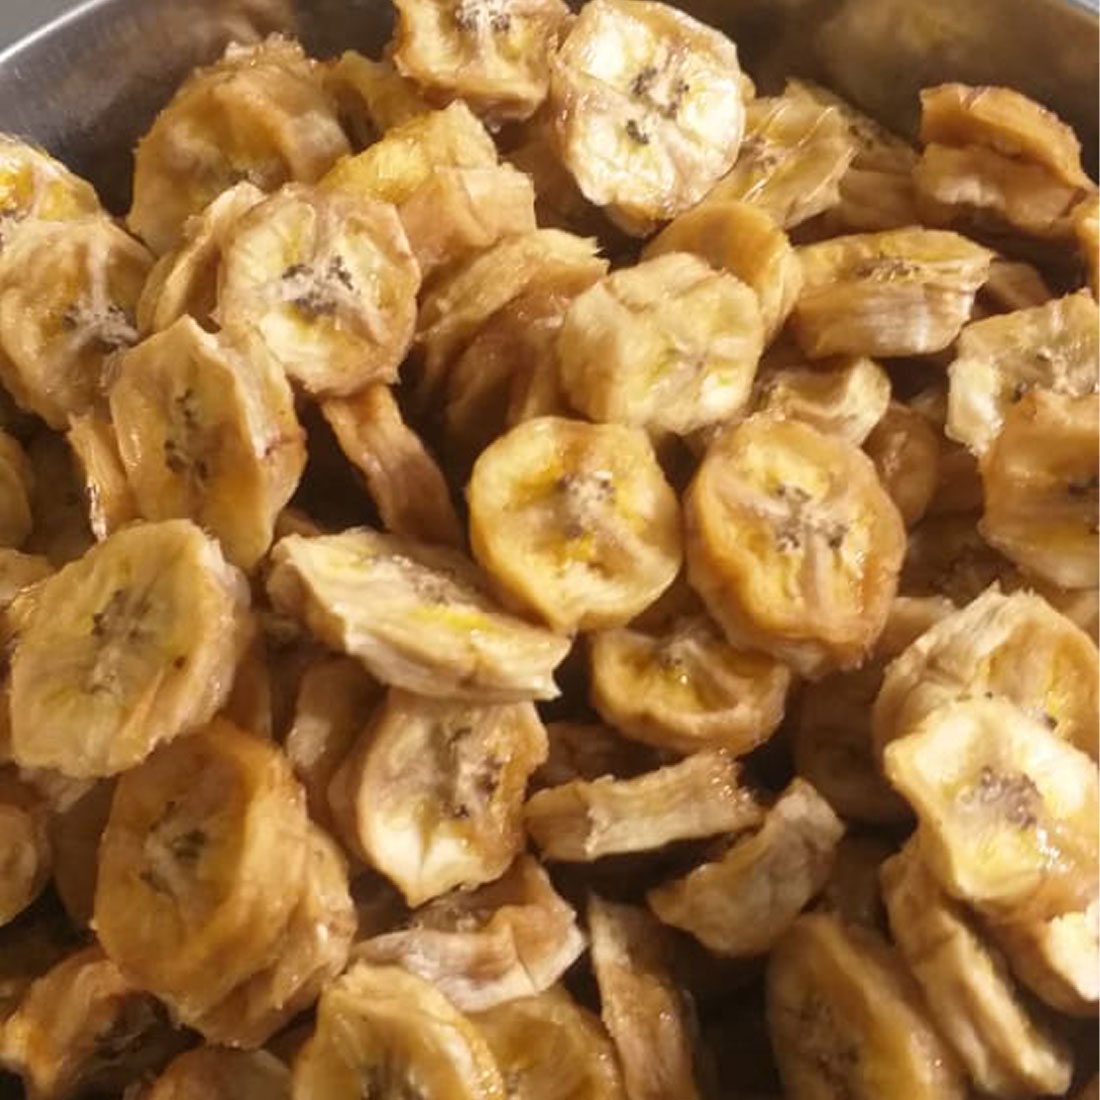 Adamjee Lukmanjee - Dried Fruits